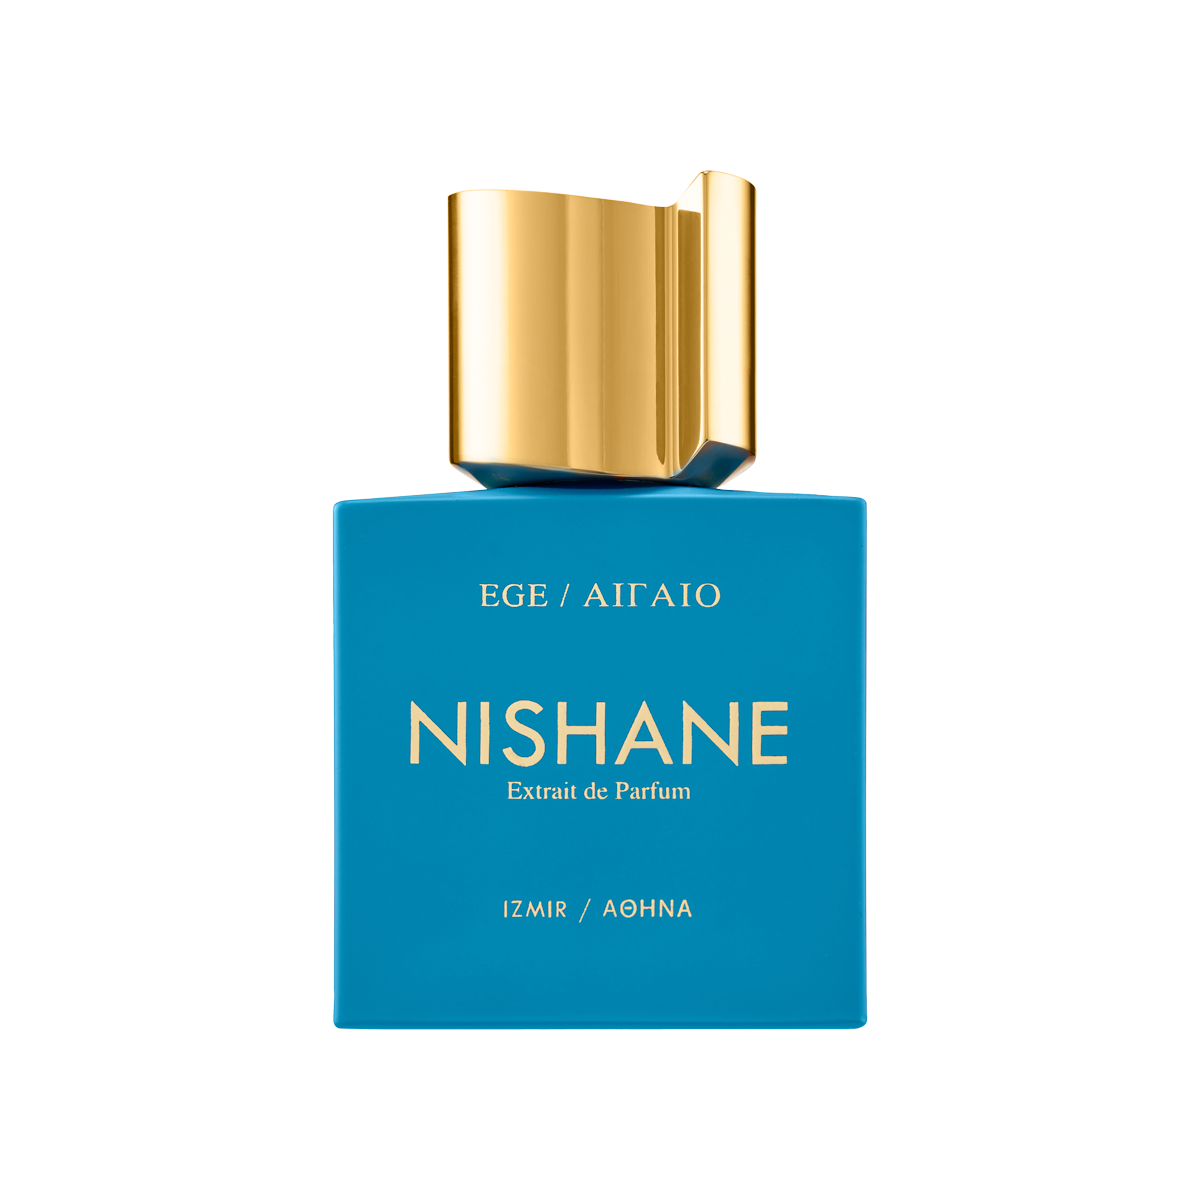 Nishane - Ege/ aiyaio Extrait de Parfum